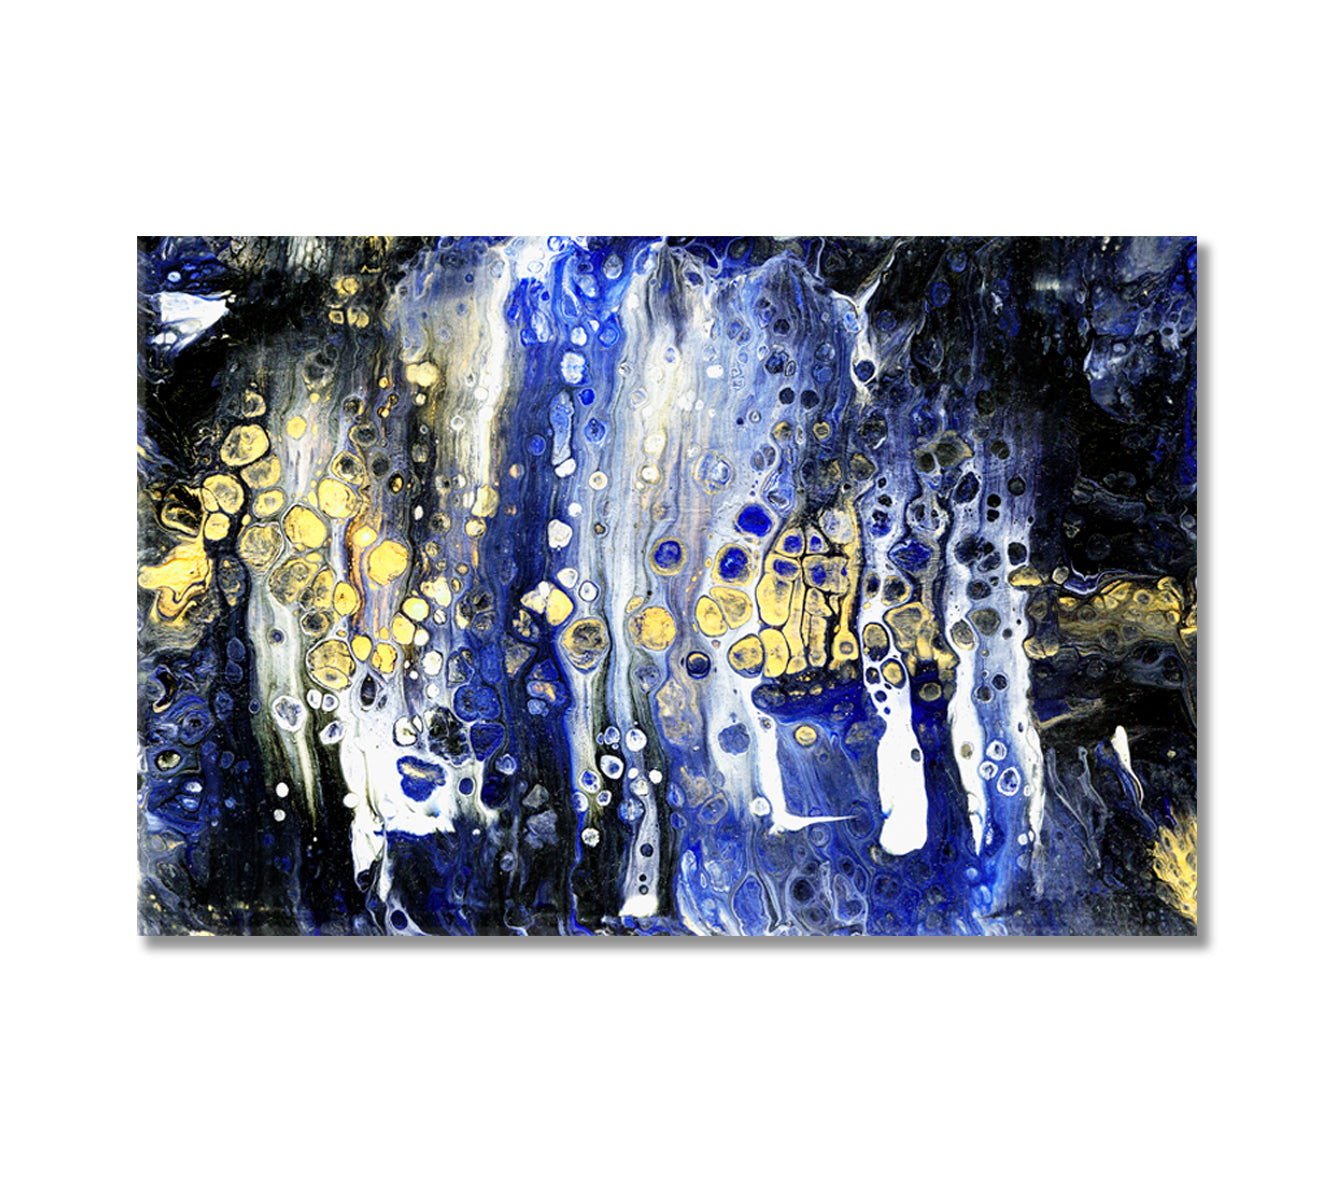 Abstract Blue Fluid Pattern Canvas Print-Canvas Print-CetArt-1 Panel-24x16 inches-CetArt